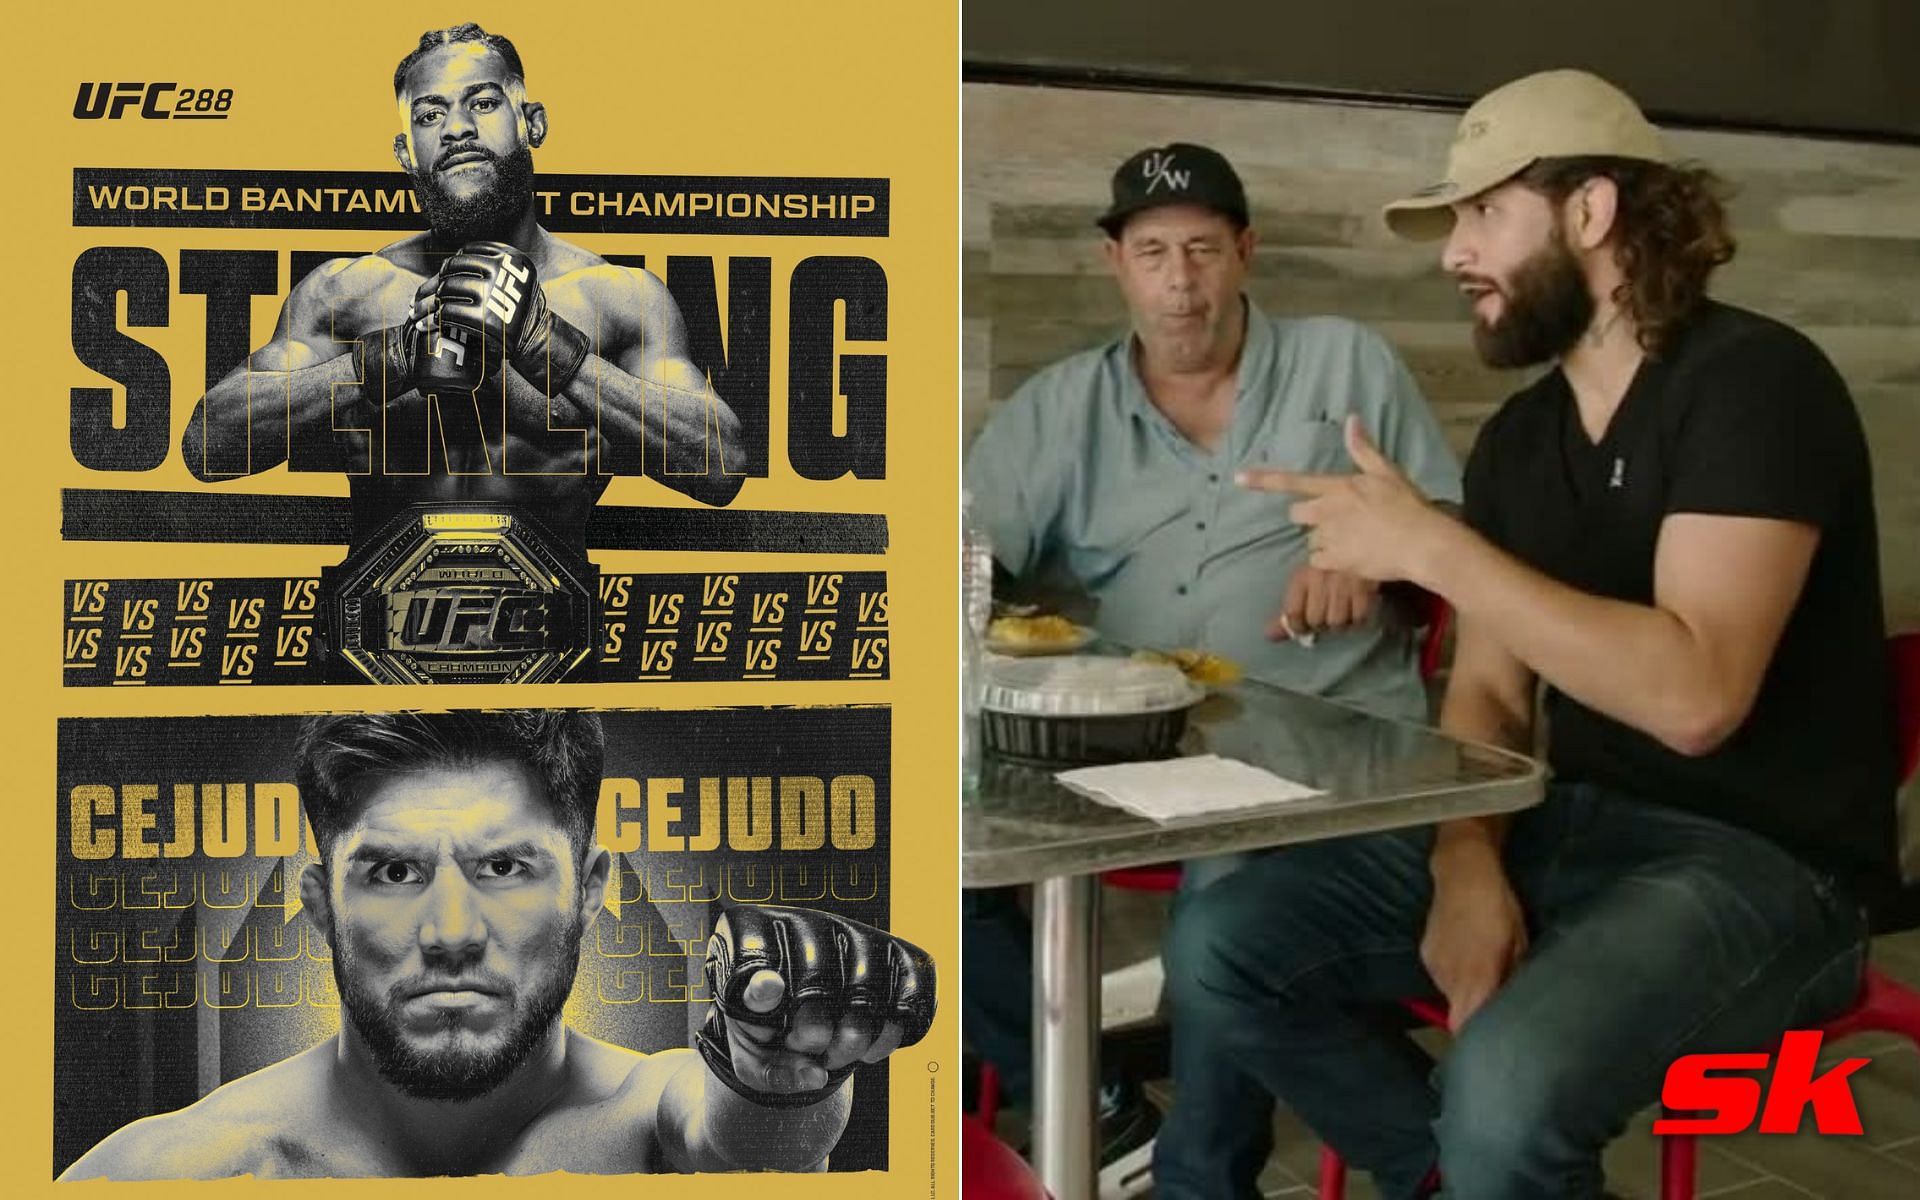 UFC 288 poster (left - via @MMAArena), Jorge Masvidal with his father (right - via ESPN